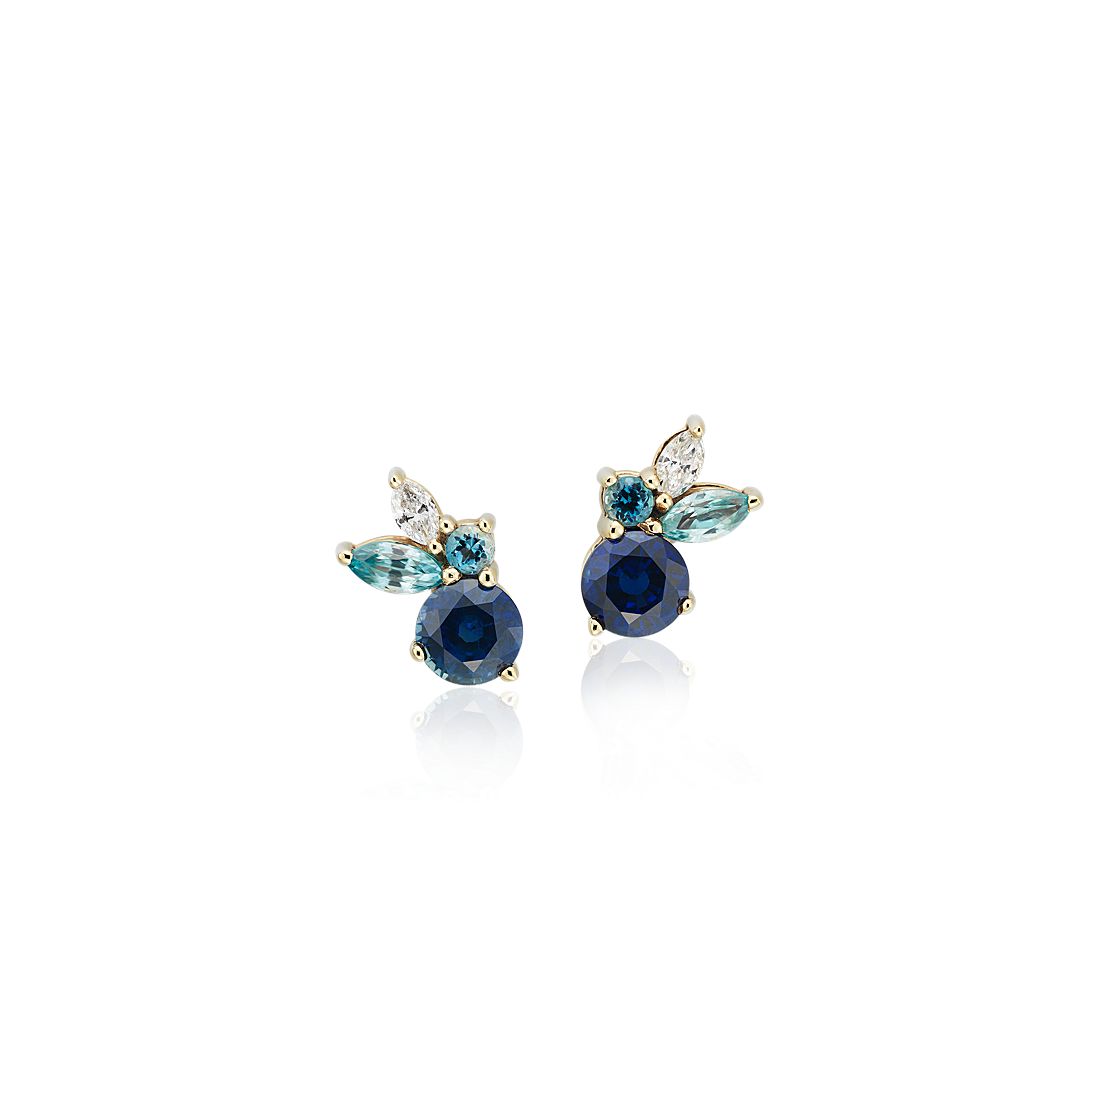 Sapphire Studs White Gold Blue stud Earrings 4mm Blue Gemstone earrings 14K White Gold Wedding Jewelry Anniversary Gift Earrings